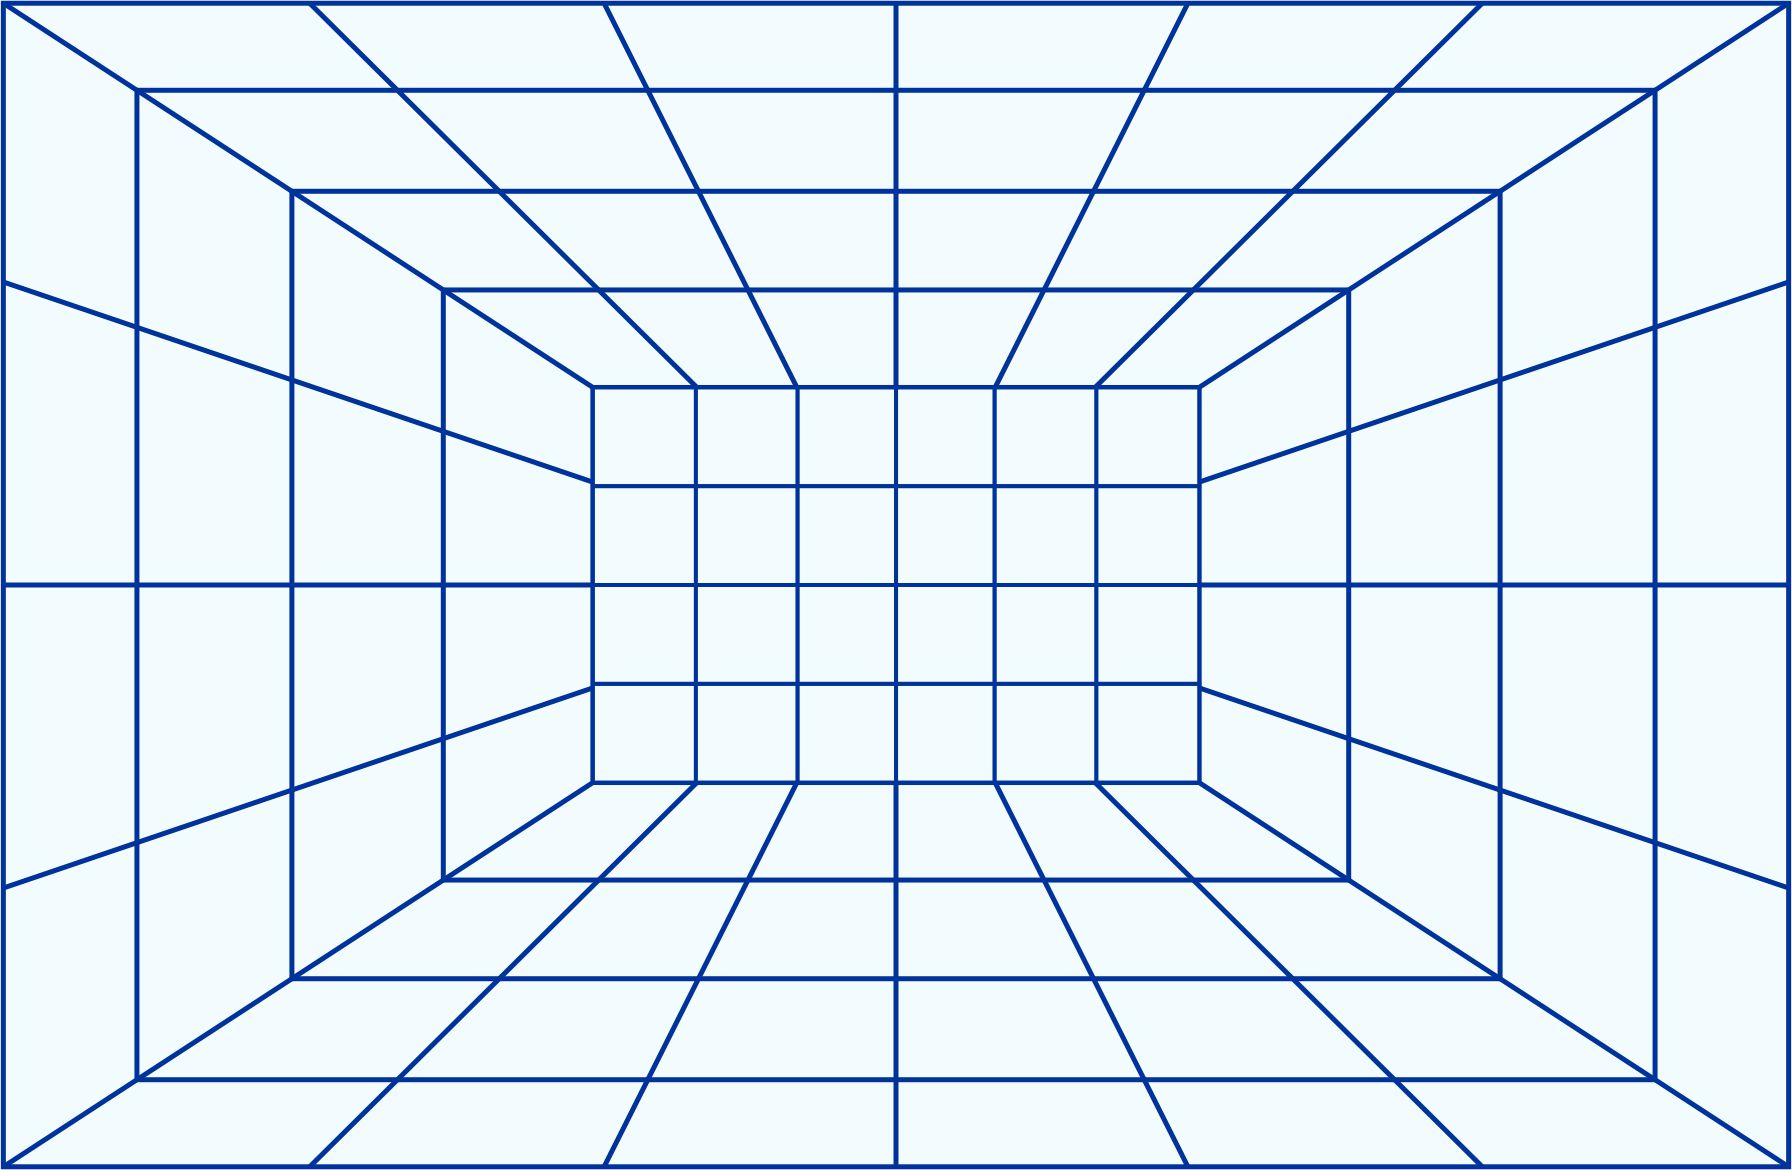 DOWNLOAD (PDF) Perspective Grid Sketchbook: 1-Point Room, 1-Point, 2-Point,  and 3-Point Perspective Grid - 170 Pages - 8.5'x11' Practice Workbook